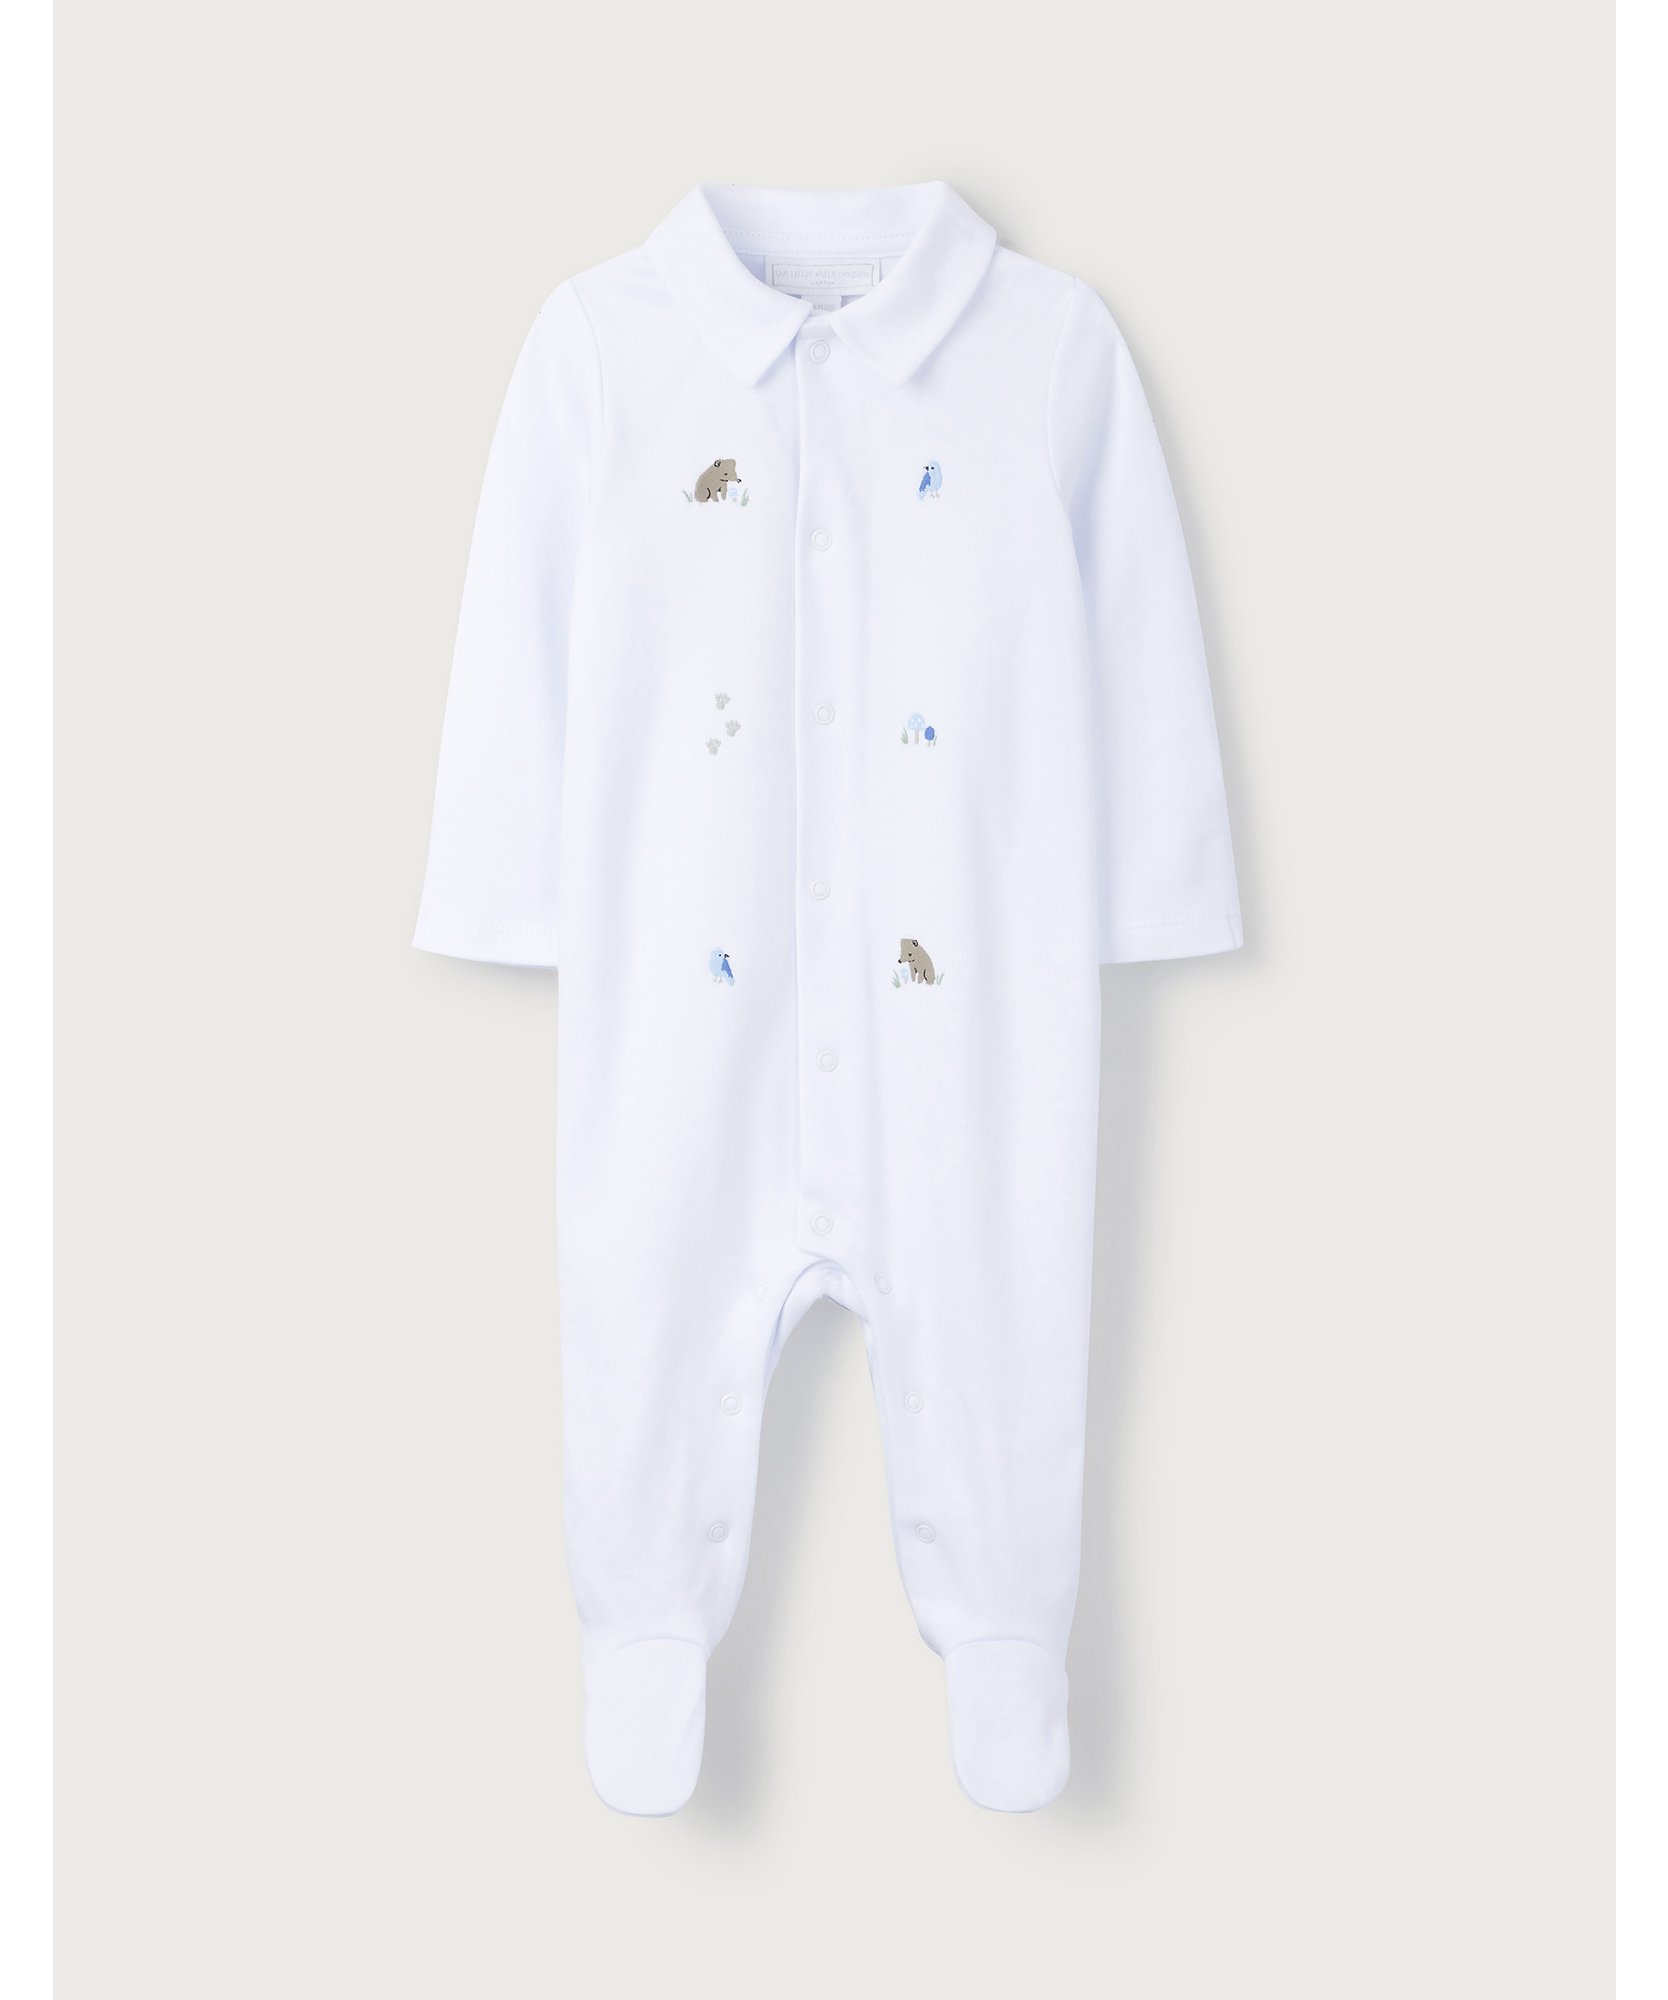 Bear & Woodland Embroidered Sleepsuit The White Company Clothing Loungewear Sleepsuits 1-1 1/2Y 